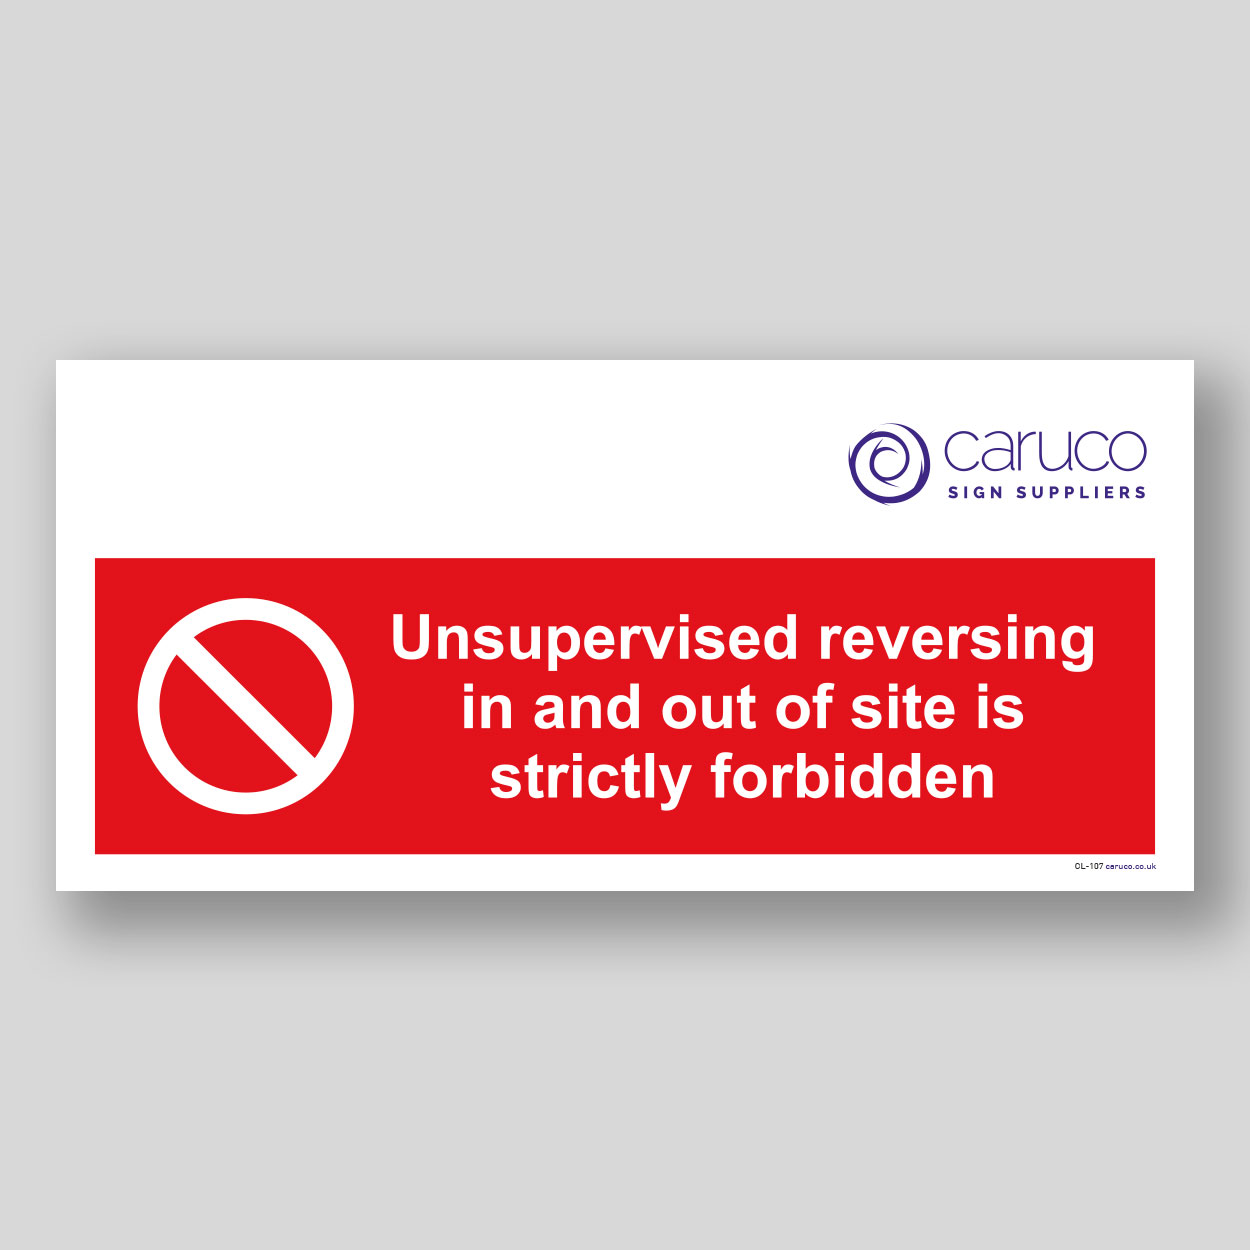 CL-107 Unsupervised reversing forbidden